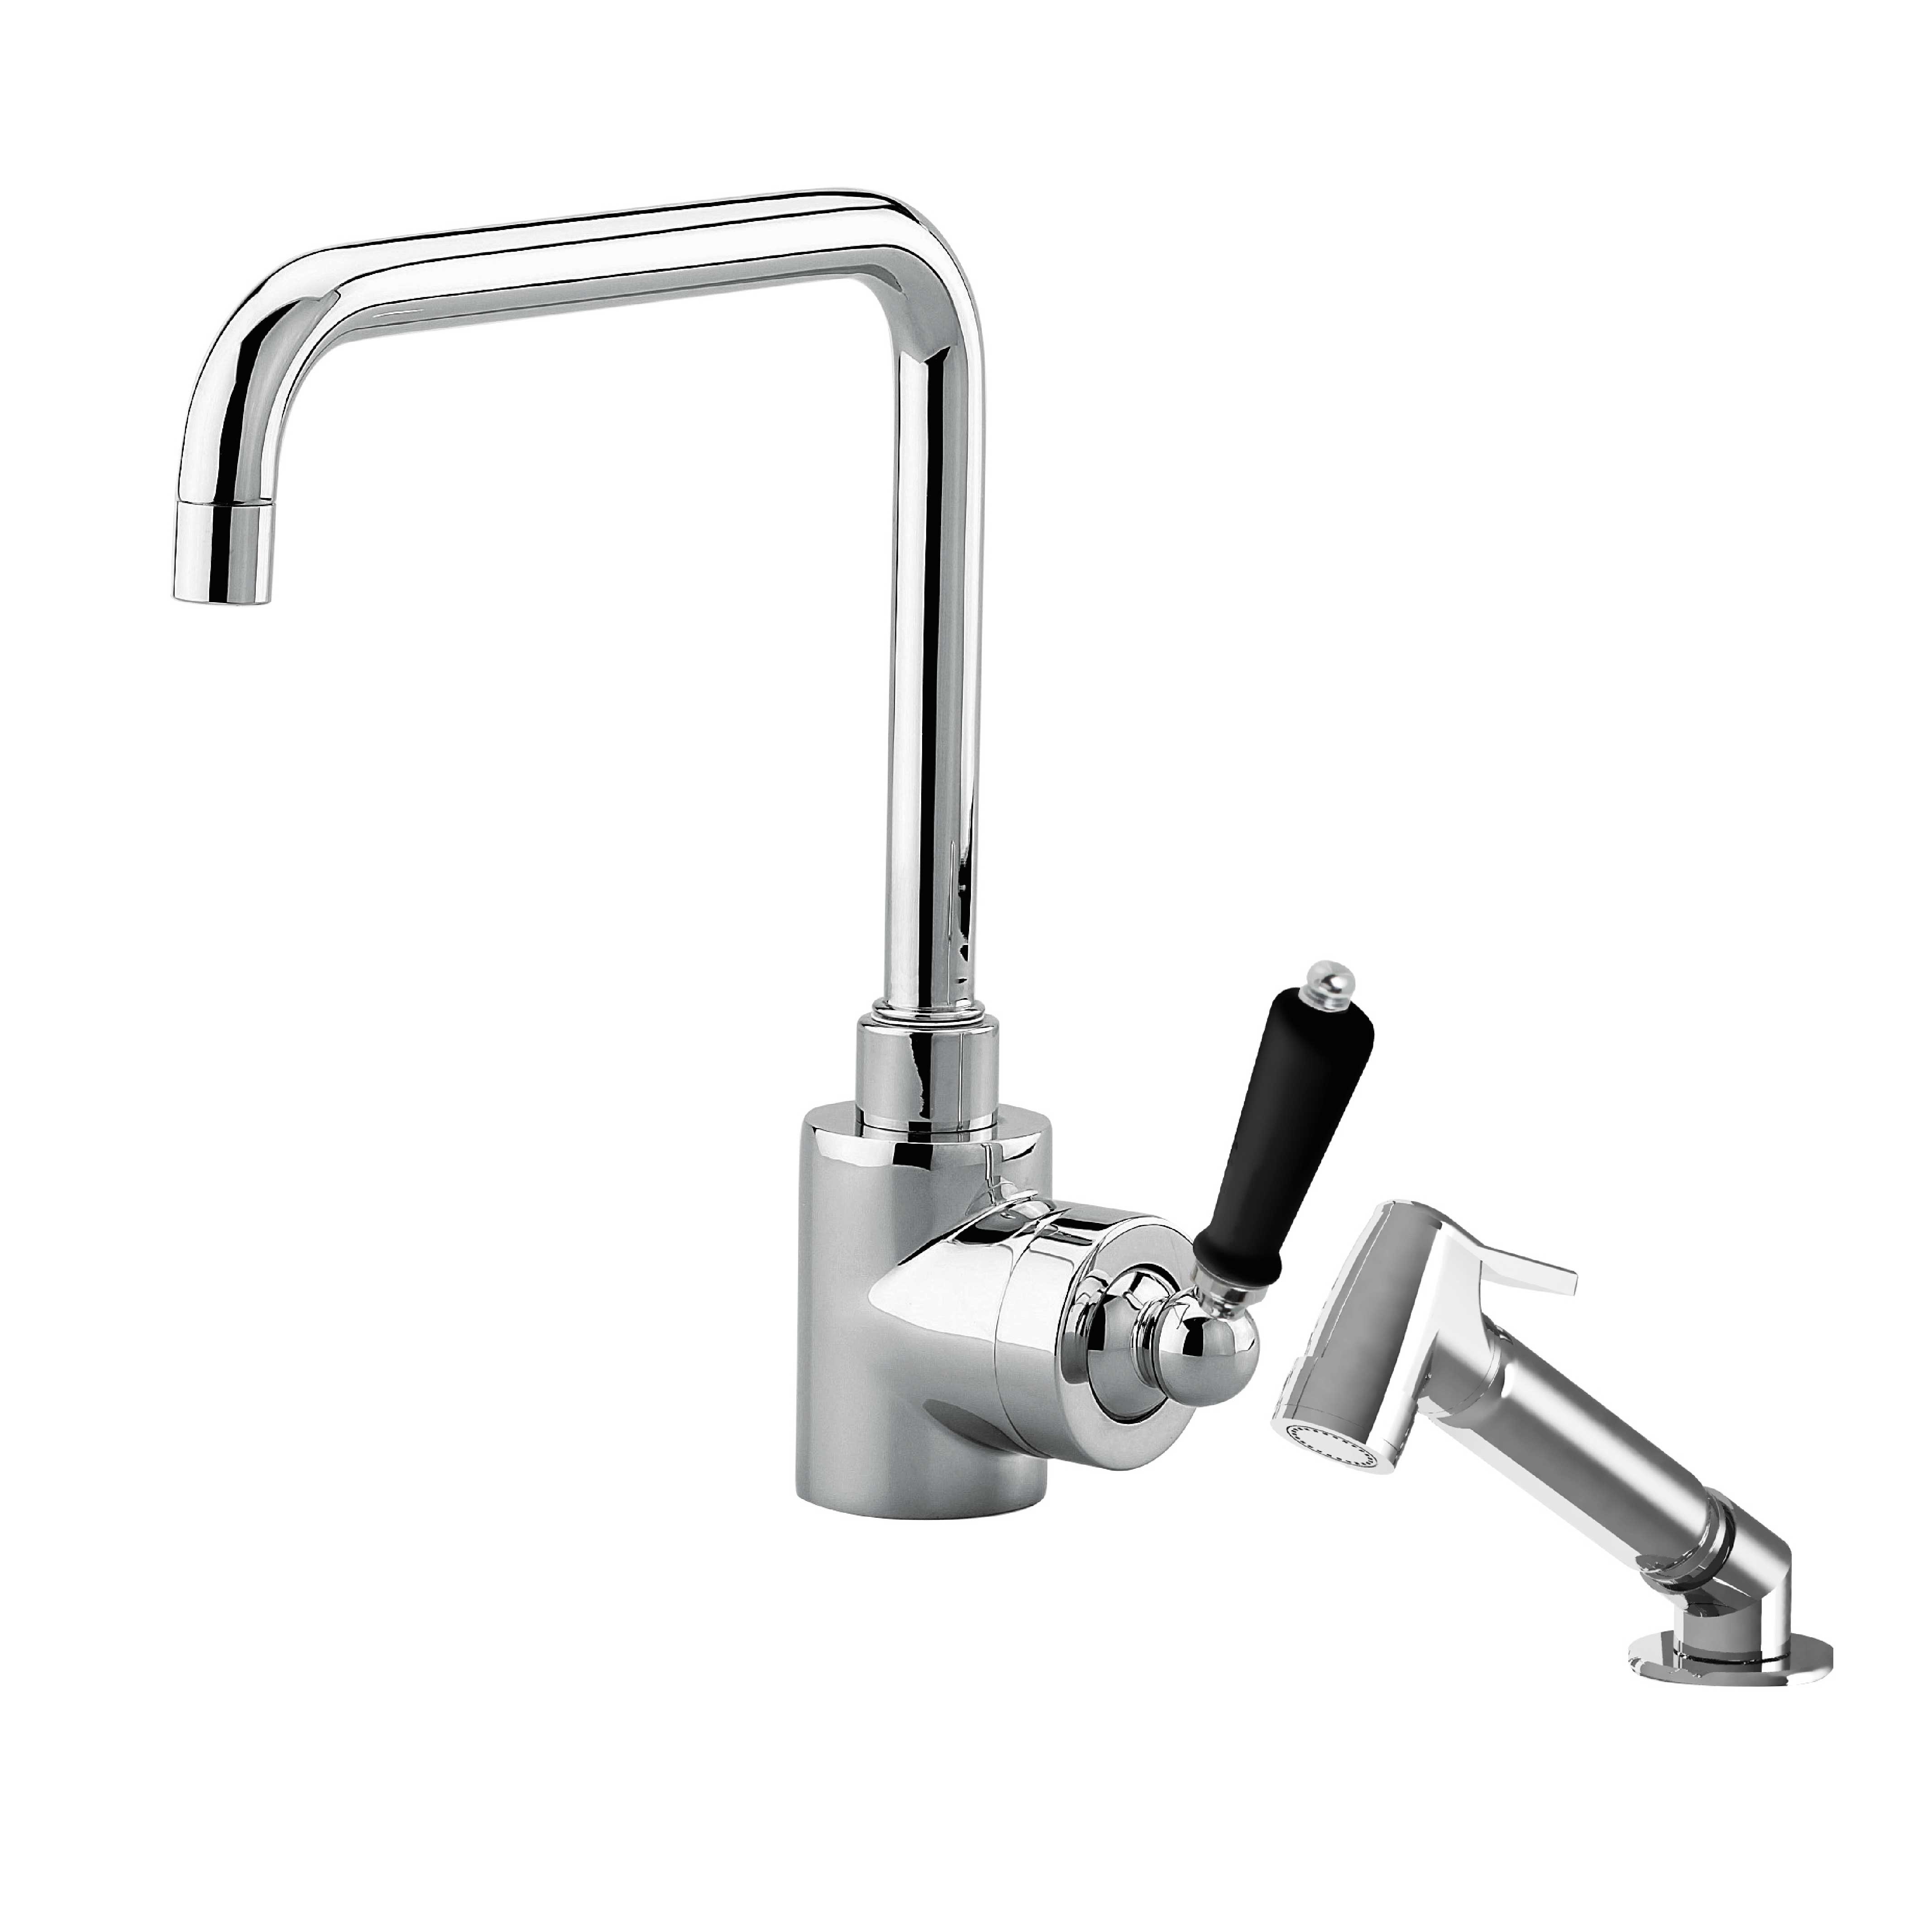 MKC-1BX5S Single-hole lever kitchen mixer & handspray